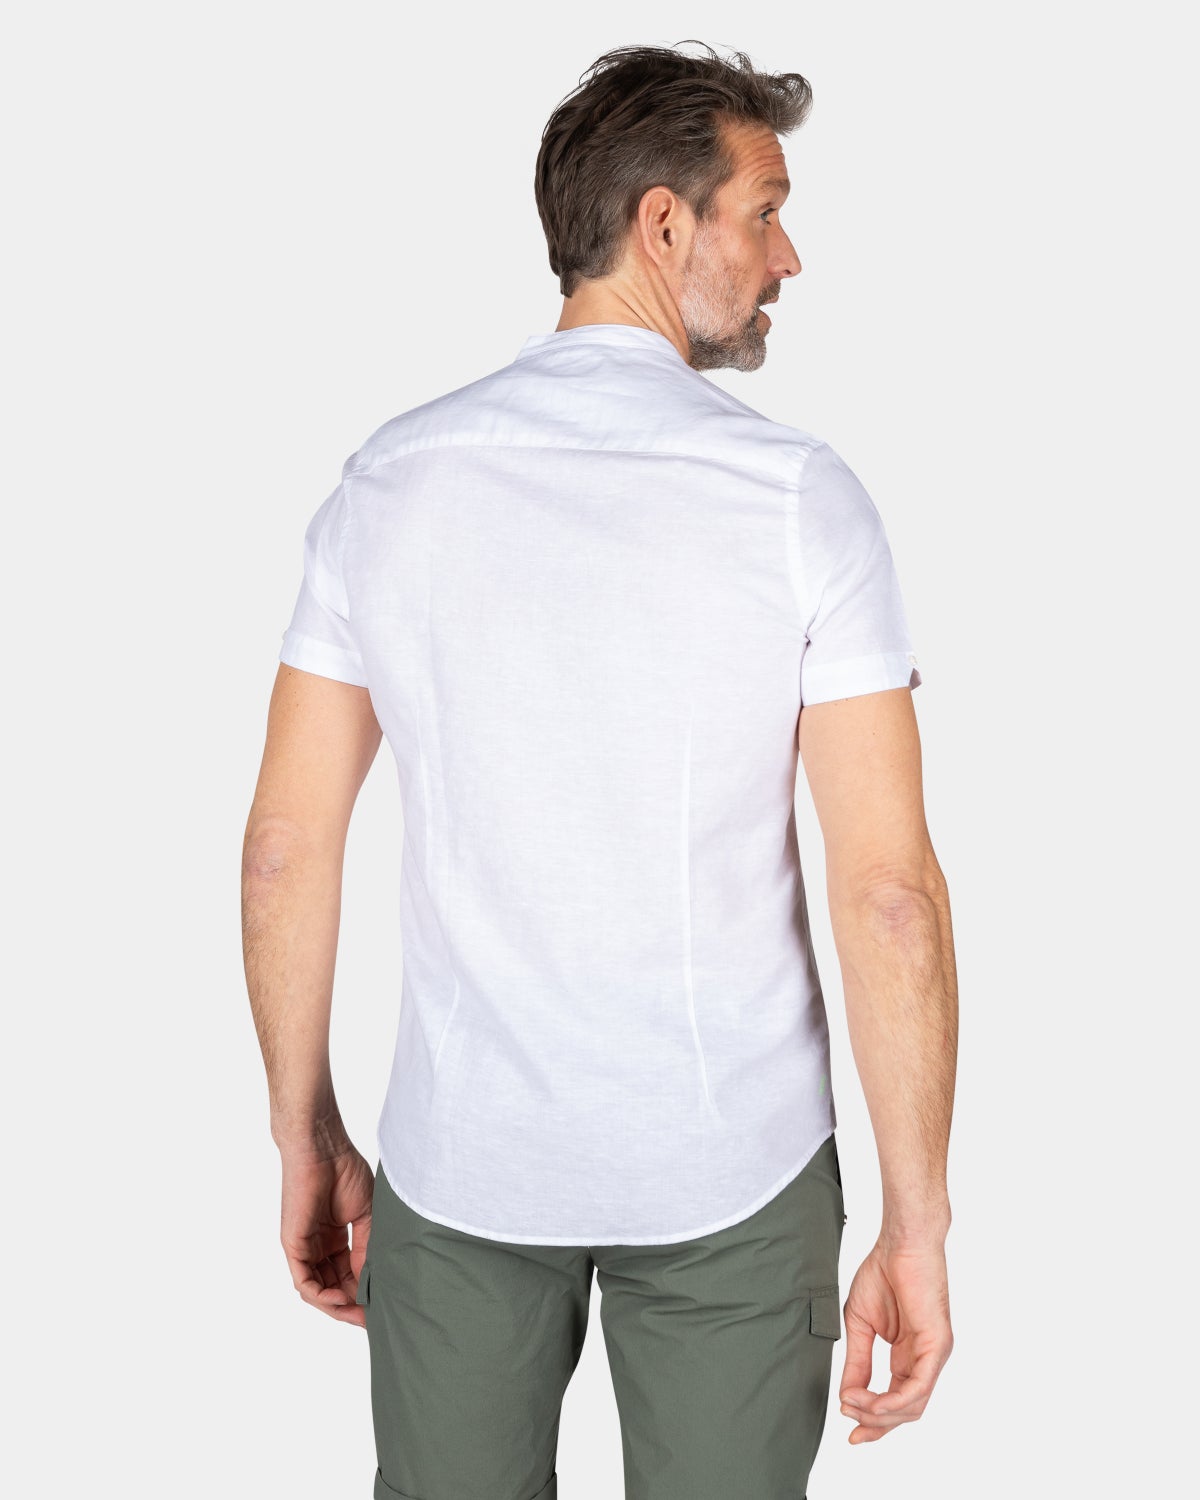 Plain shirt short sleeves - White